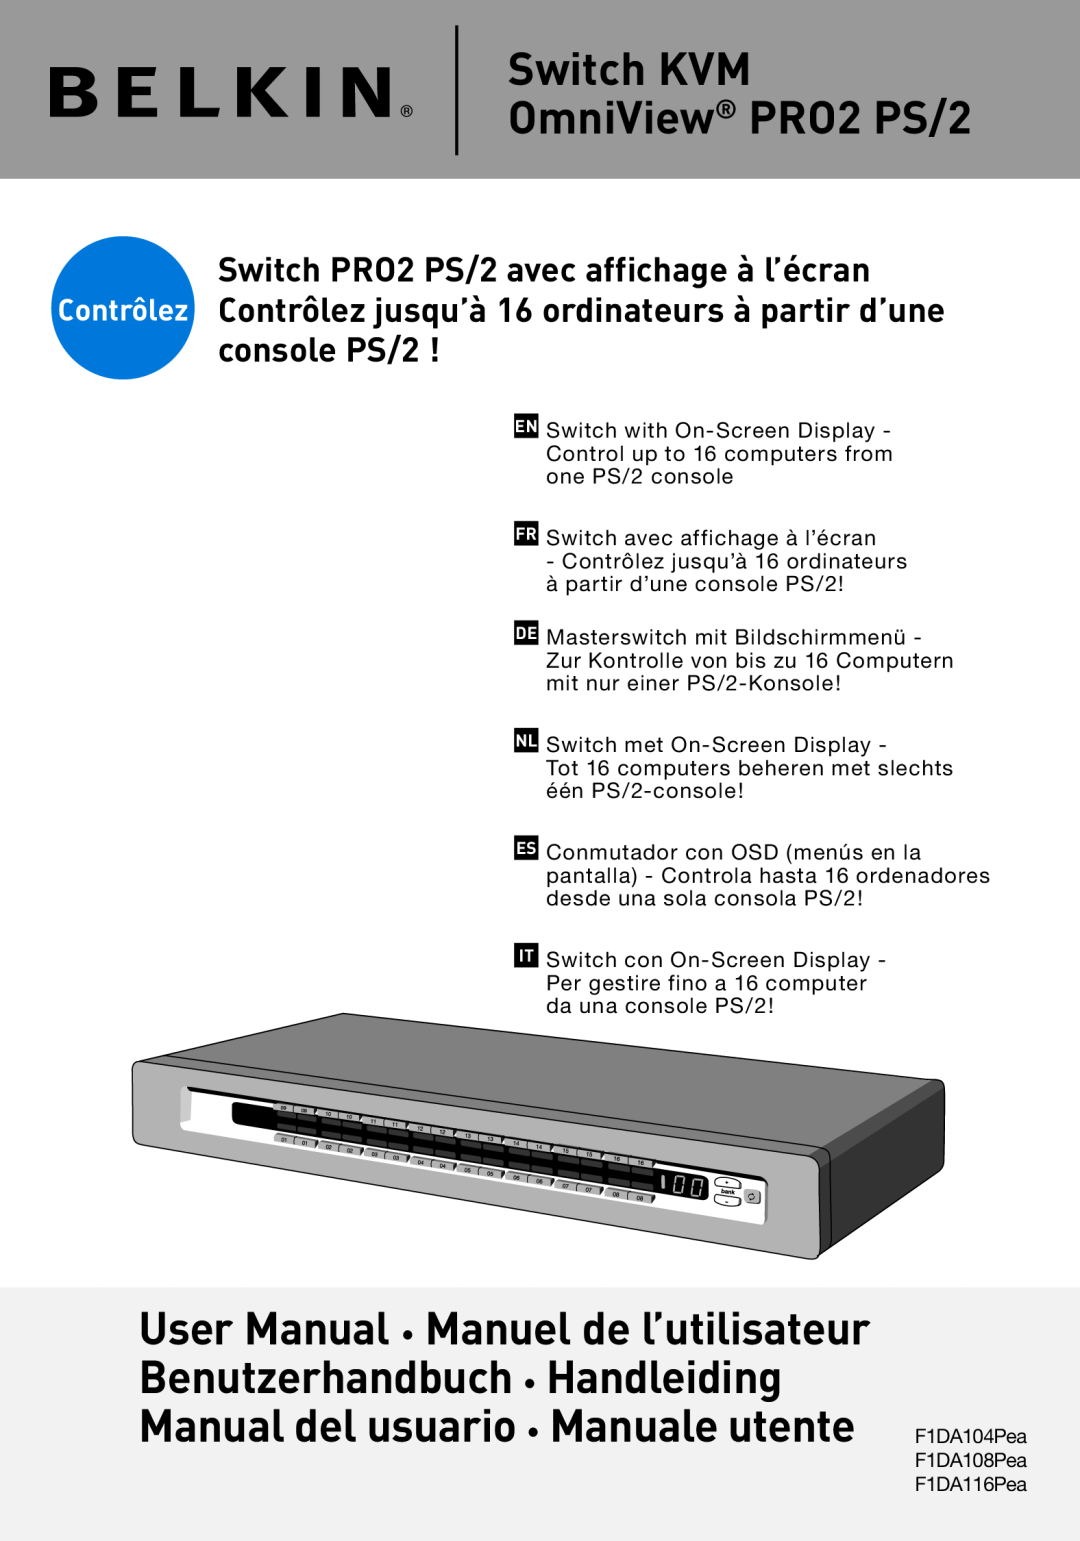 Belkin user manual Switch KVM OmniView PRO2 PS/2, console PS/2 